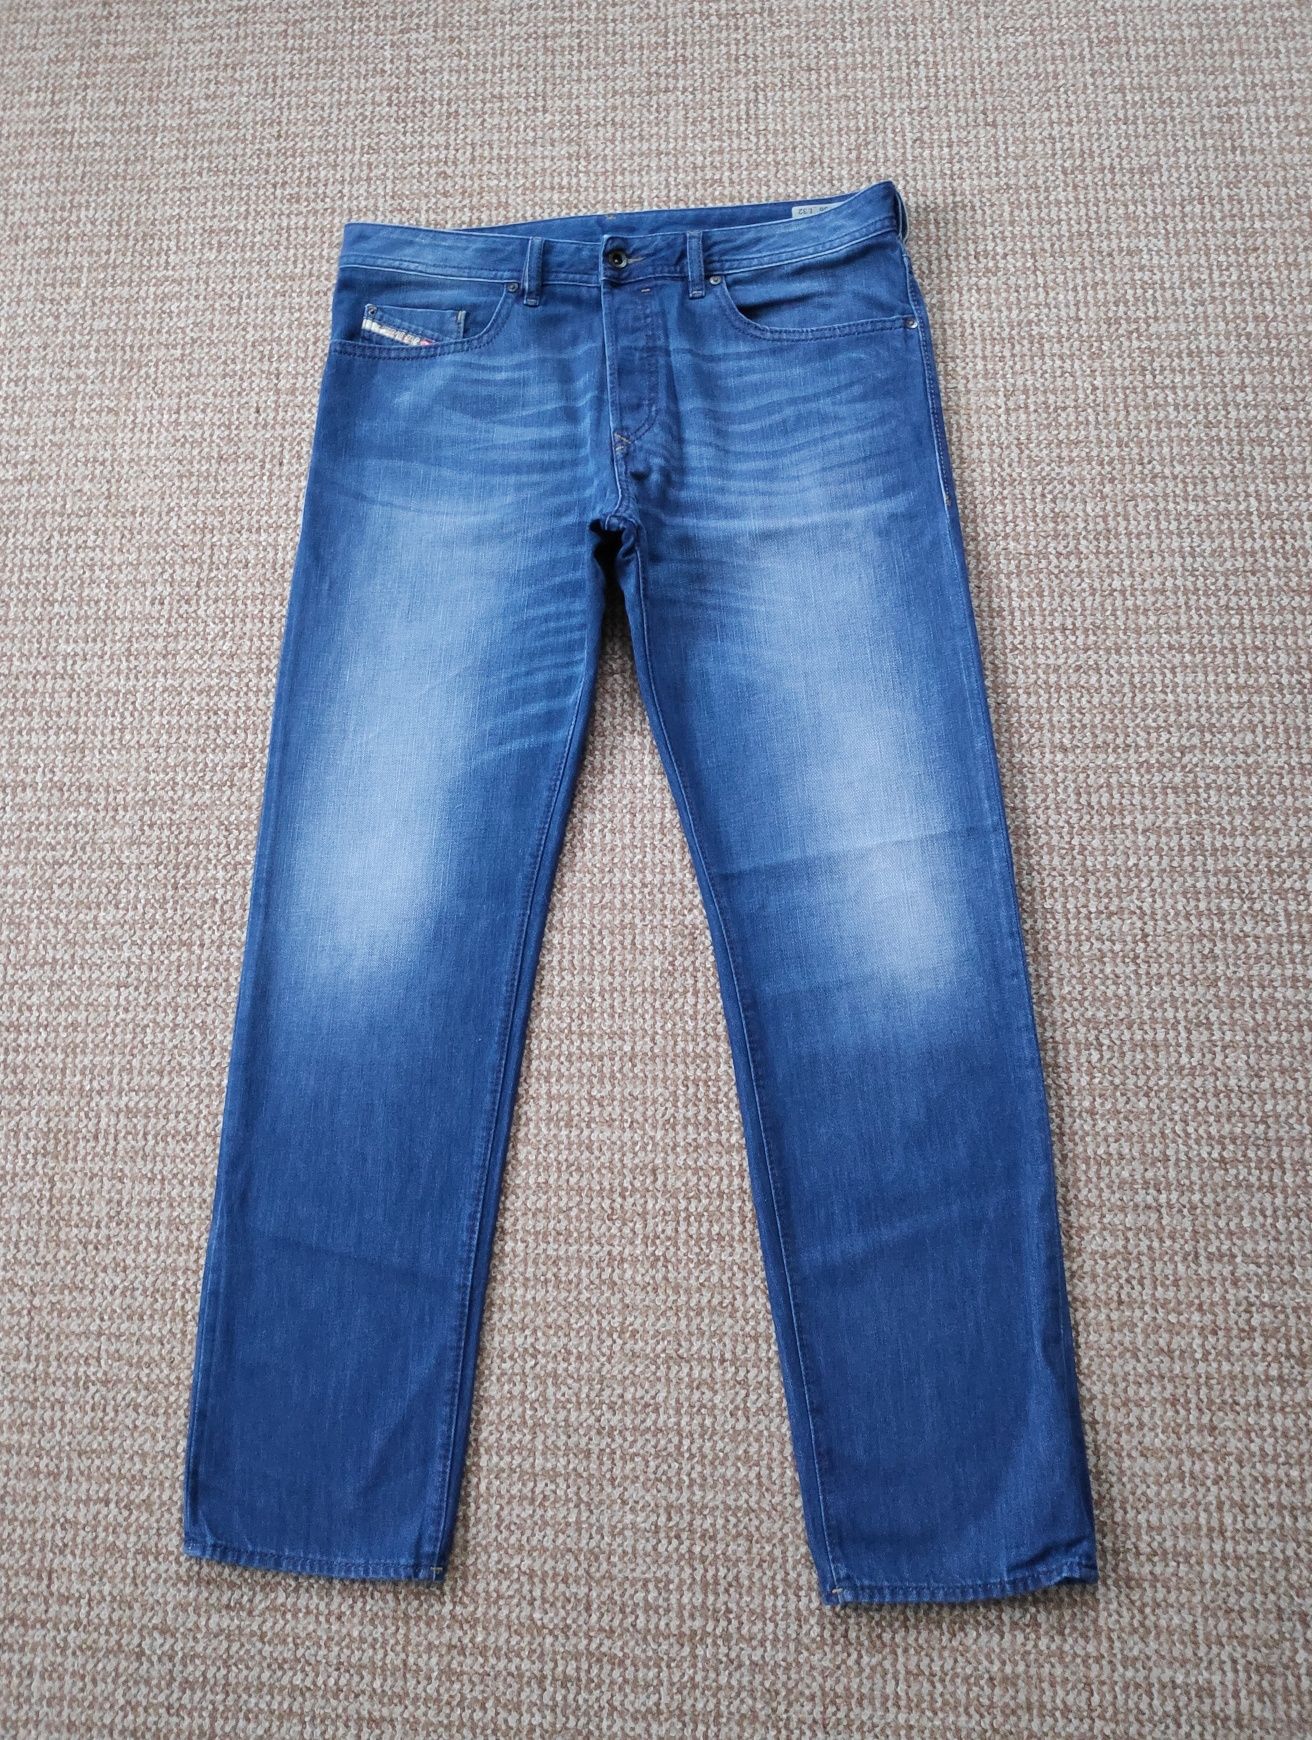 DIESEL Buster W36 L32 джинсы regular slim tapered ОРИГИНАЛ